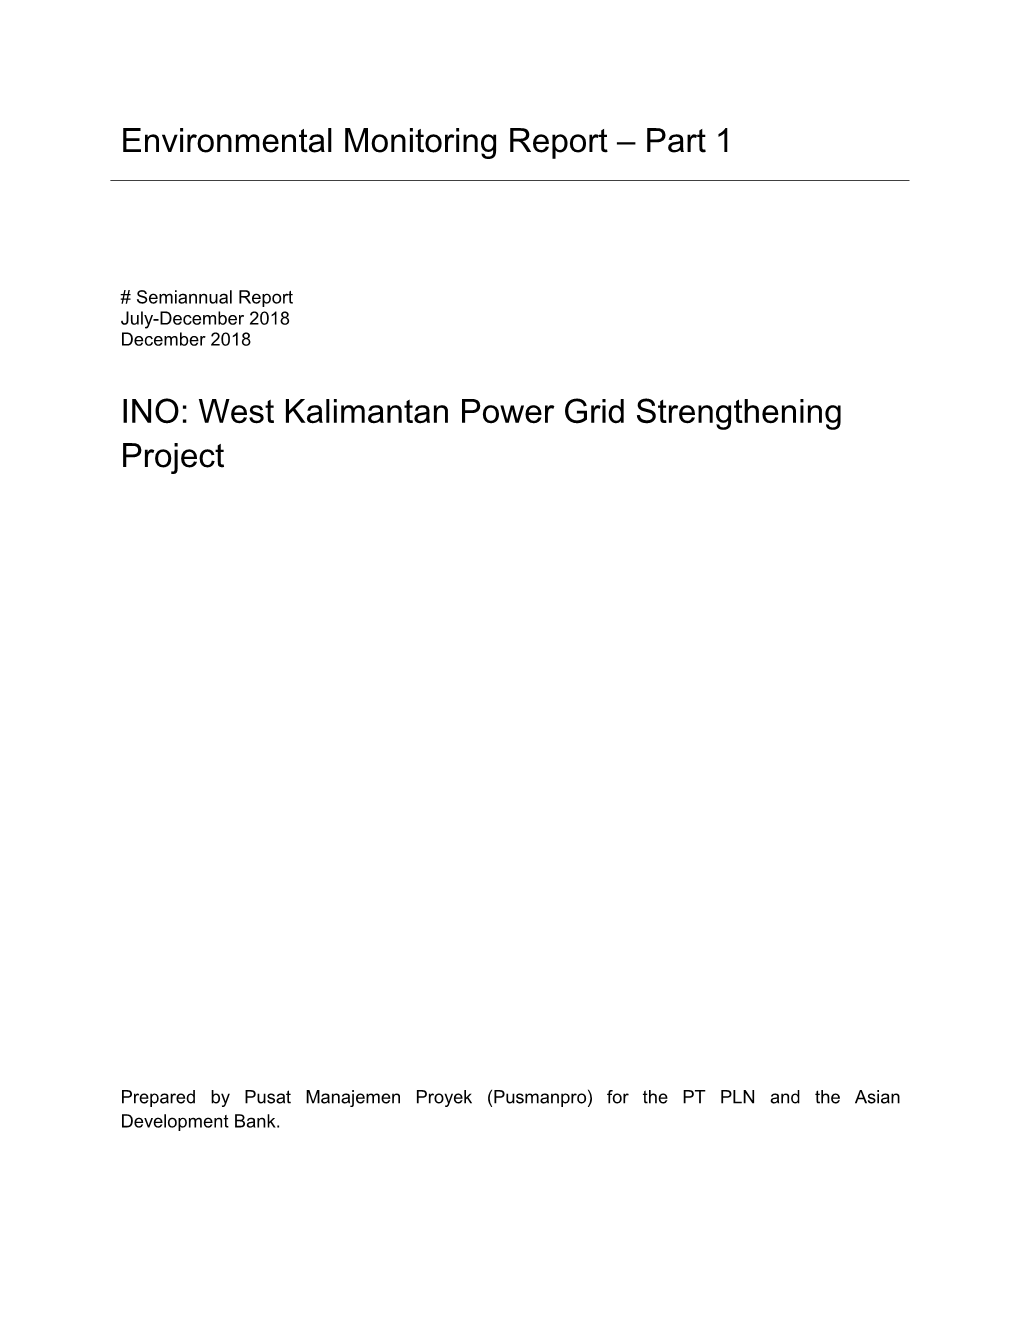 West Kalimantan Power Grid Strengthening Project